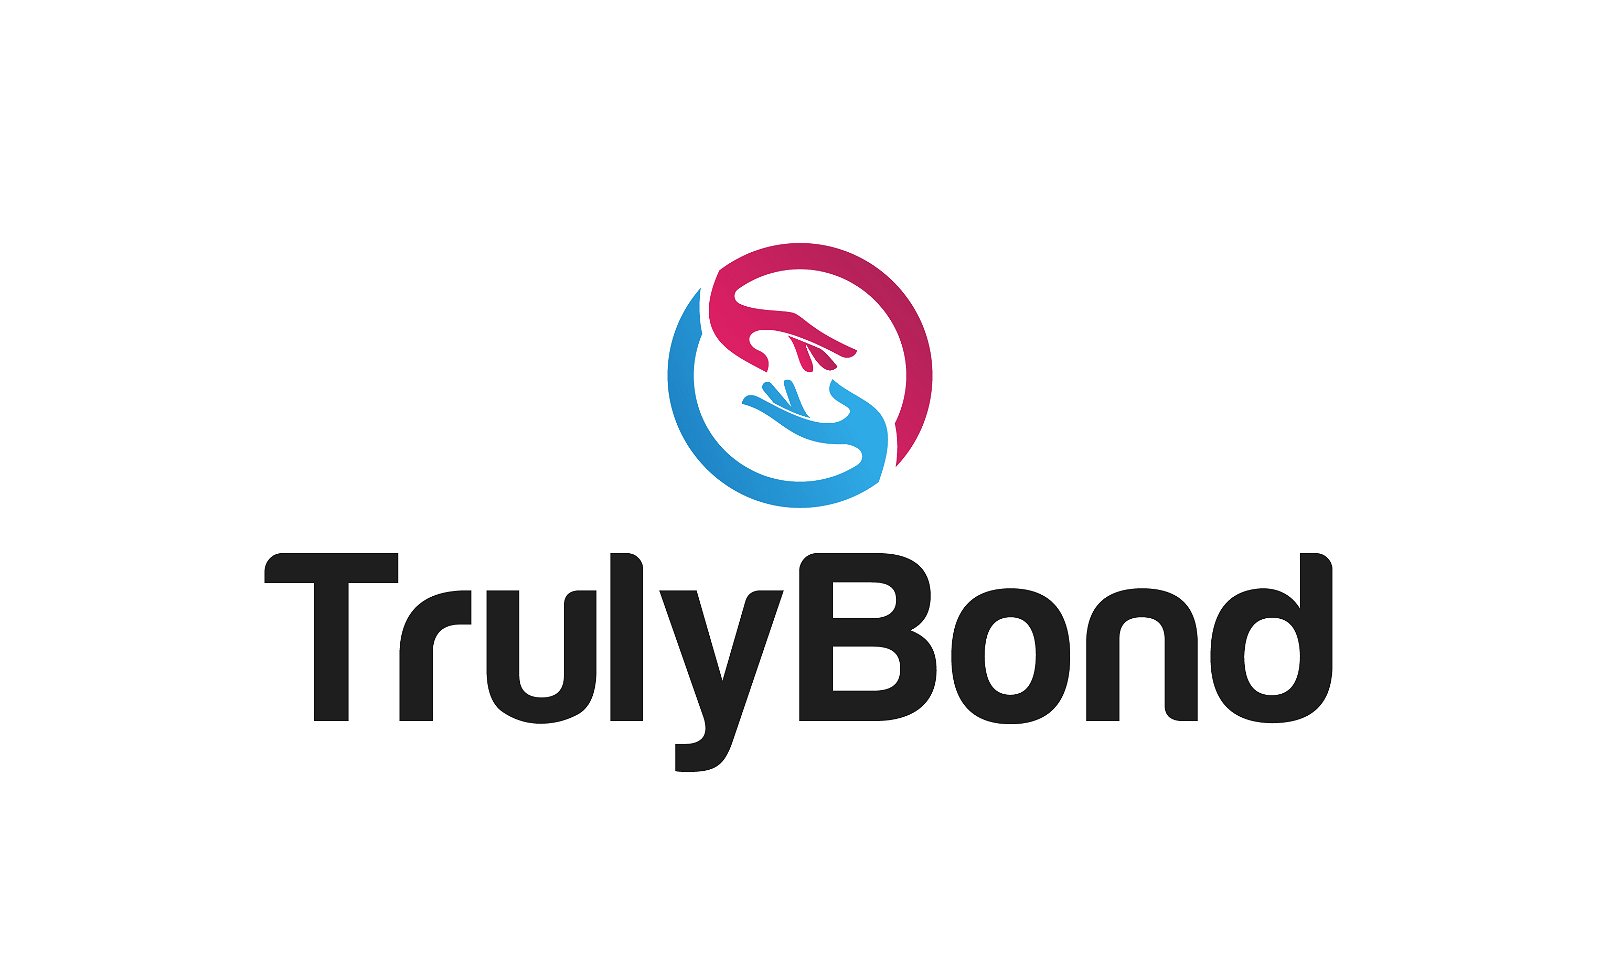 TrulyBond.com - Creative brandable domain for sale